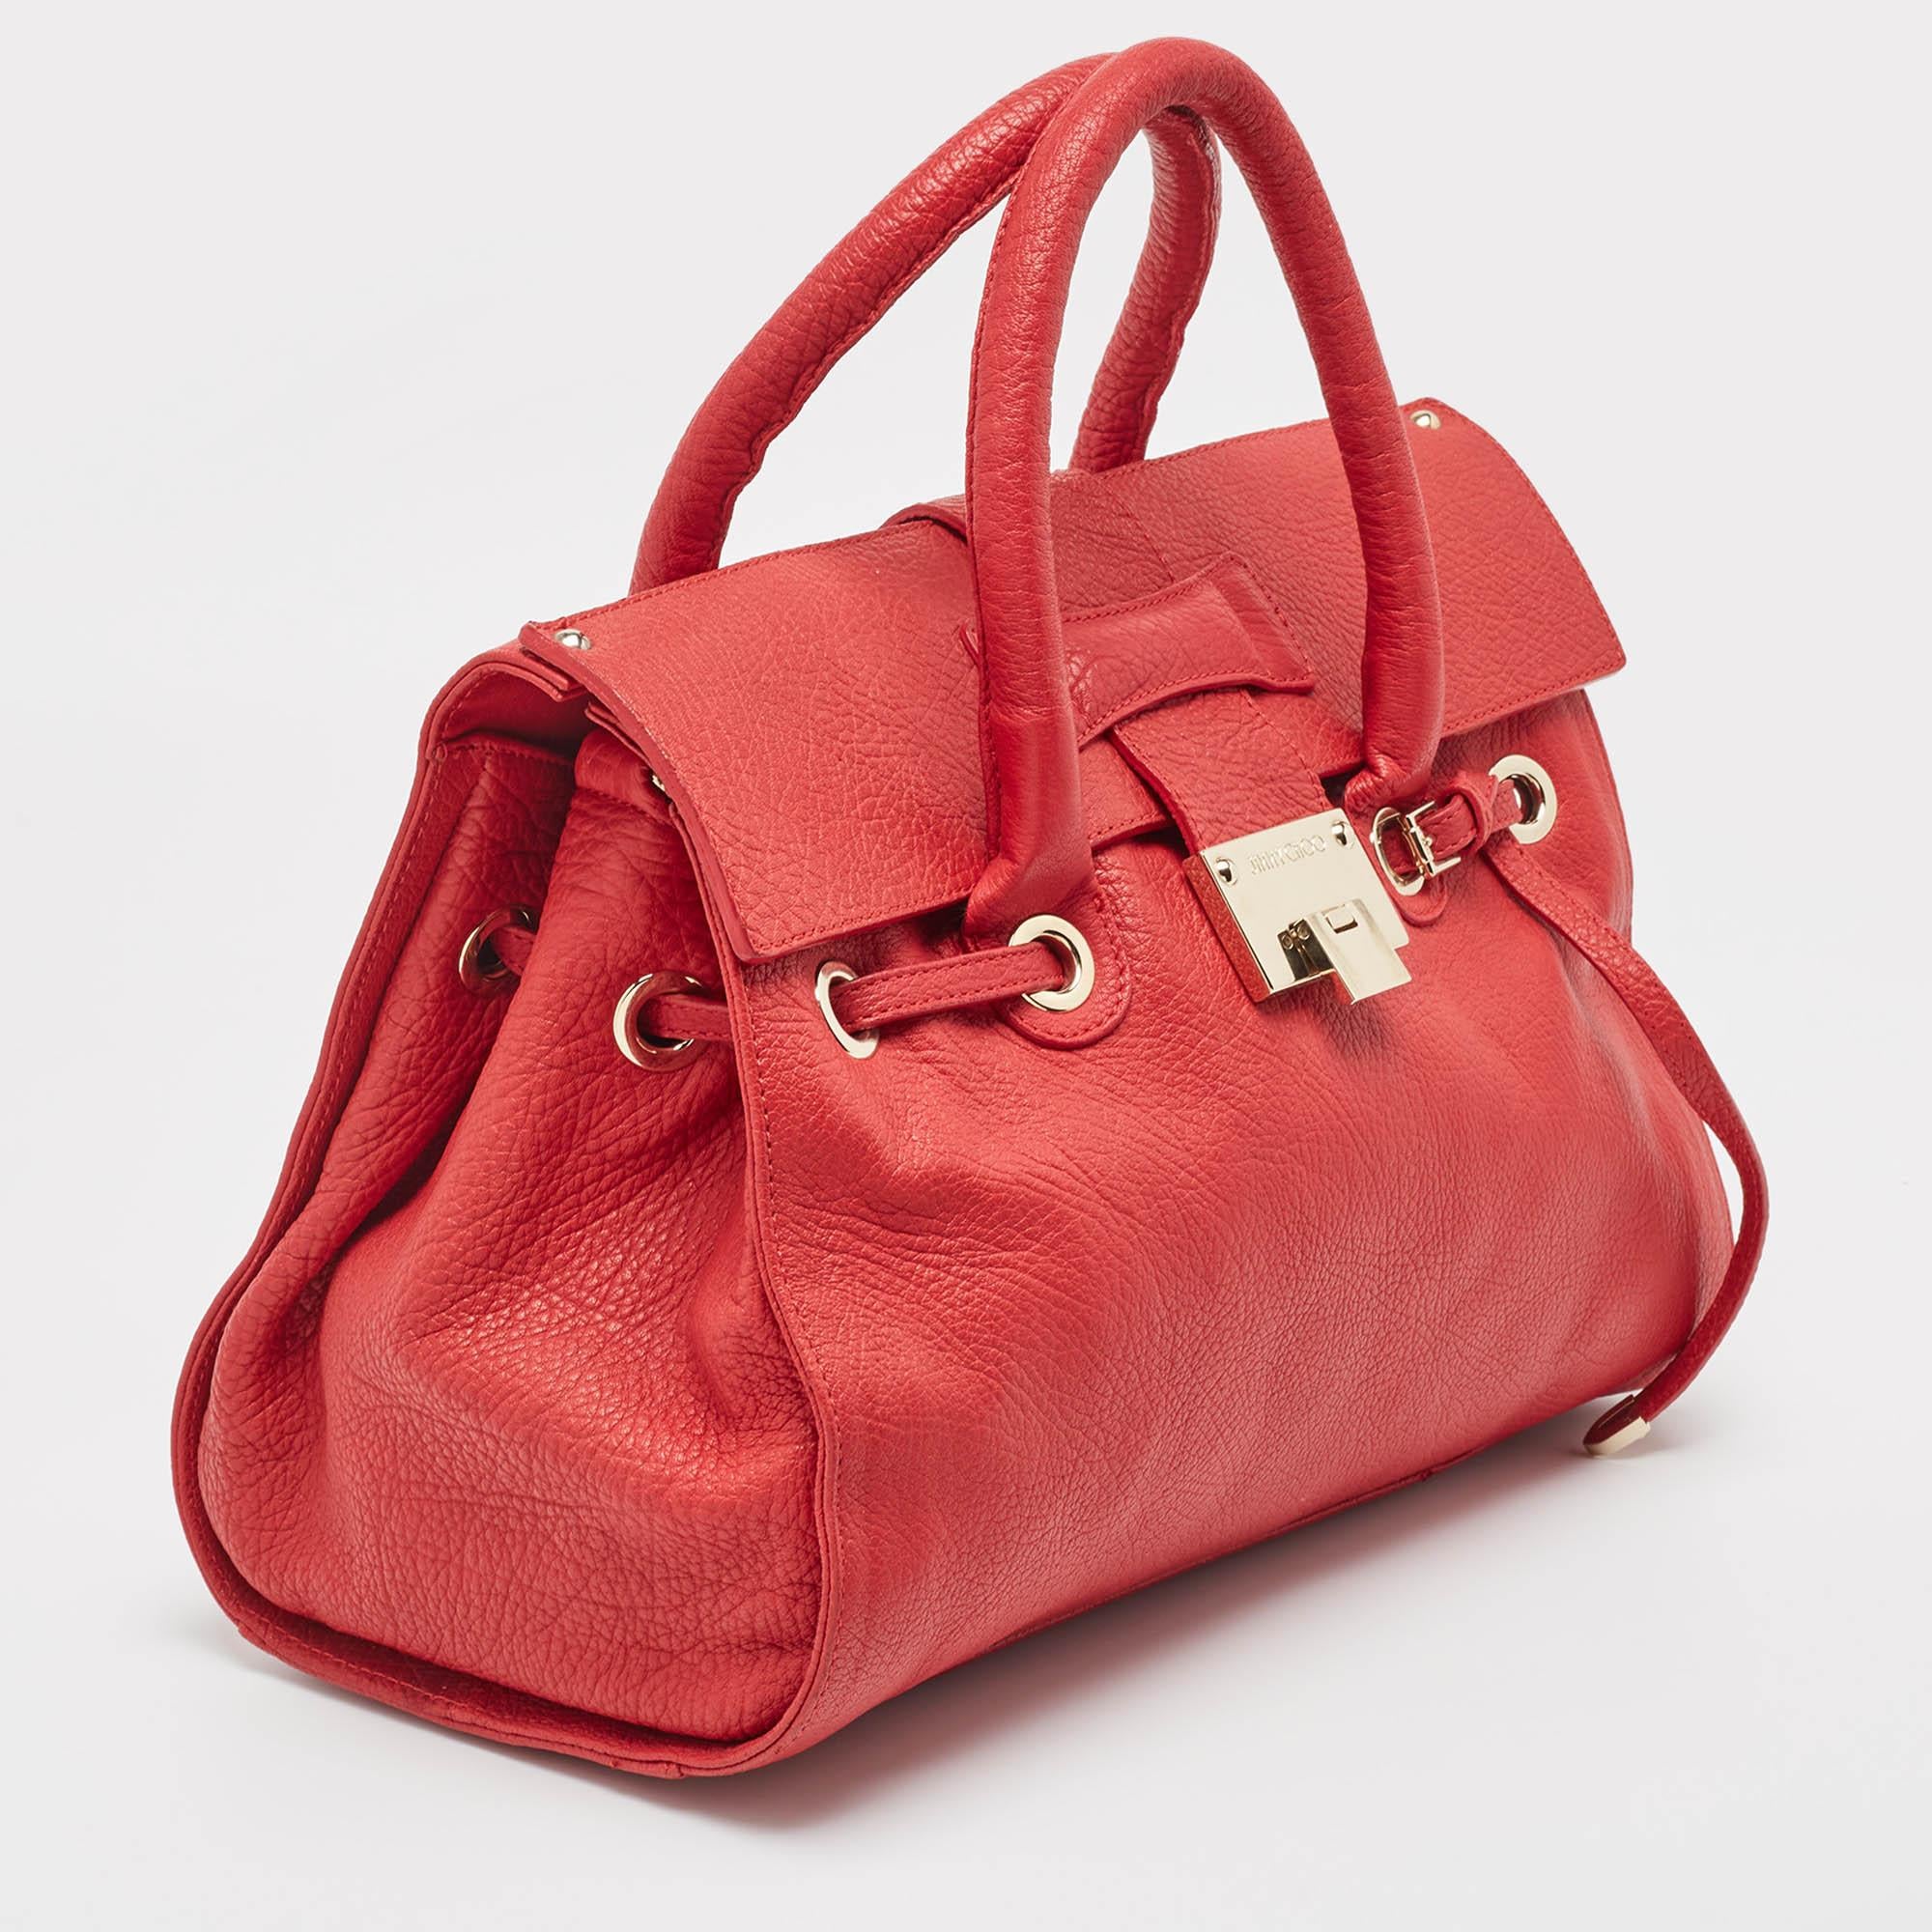 Women's Jimmy Choo Red Leather Rosalie Satchel For Sale